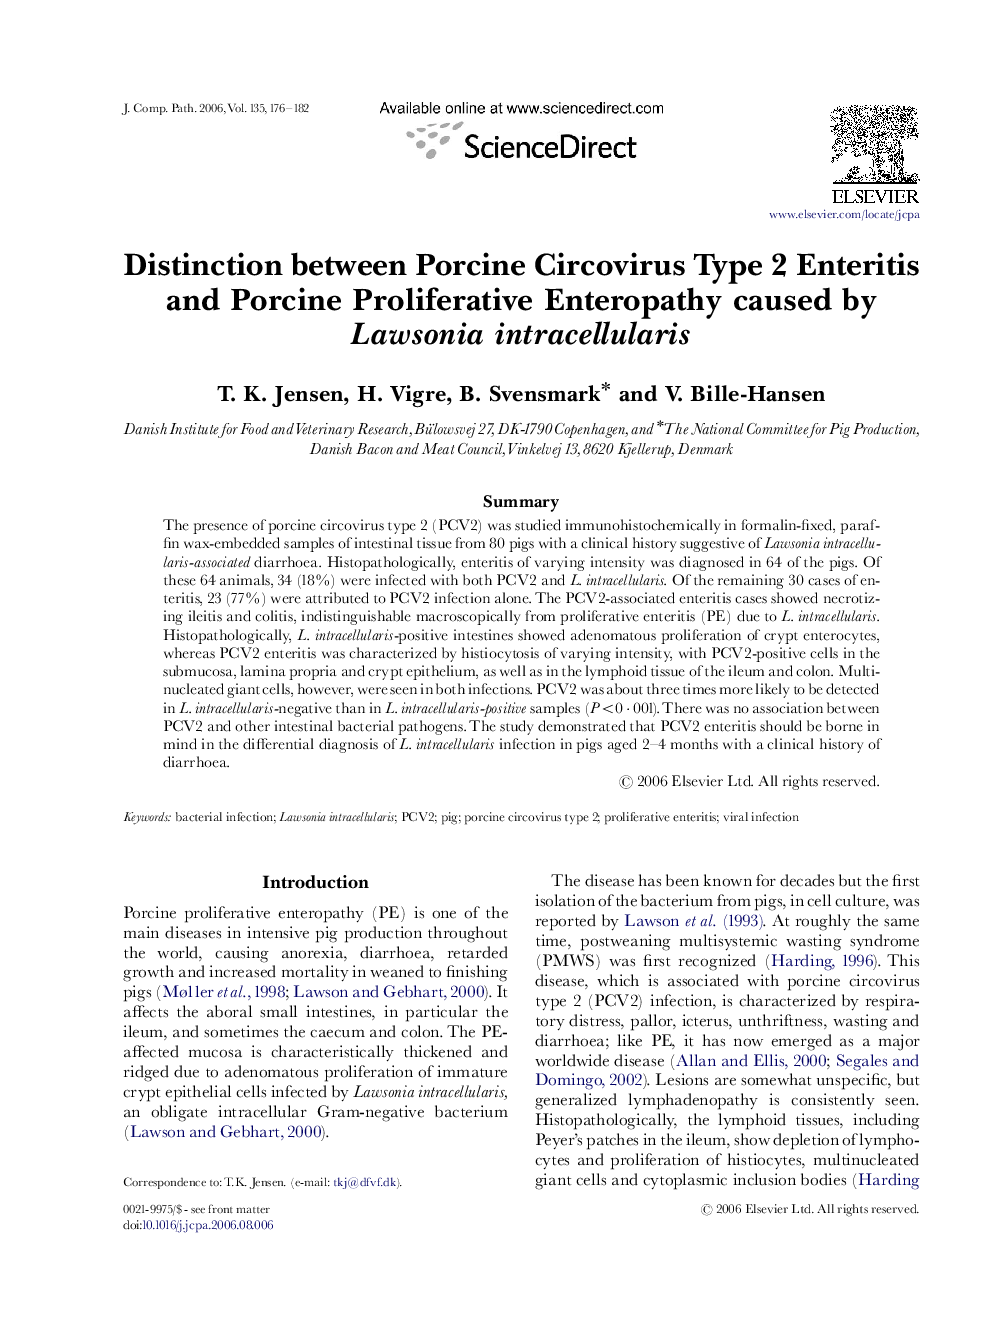 Distinction between Porcine Circovirus Type 2 Enteritis and Porcine Proliferative Enteropathy caused by Lawsonia intracellularis